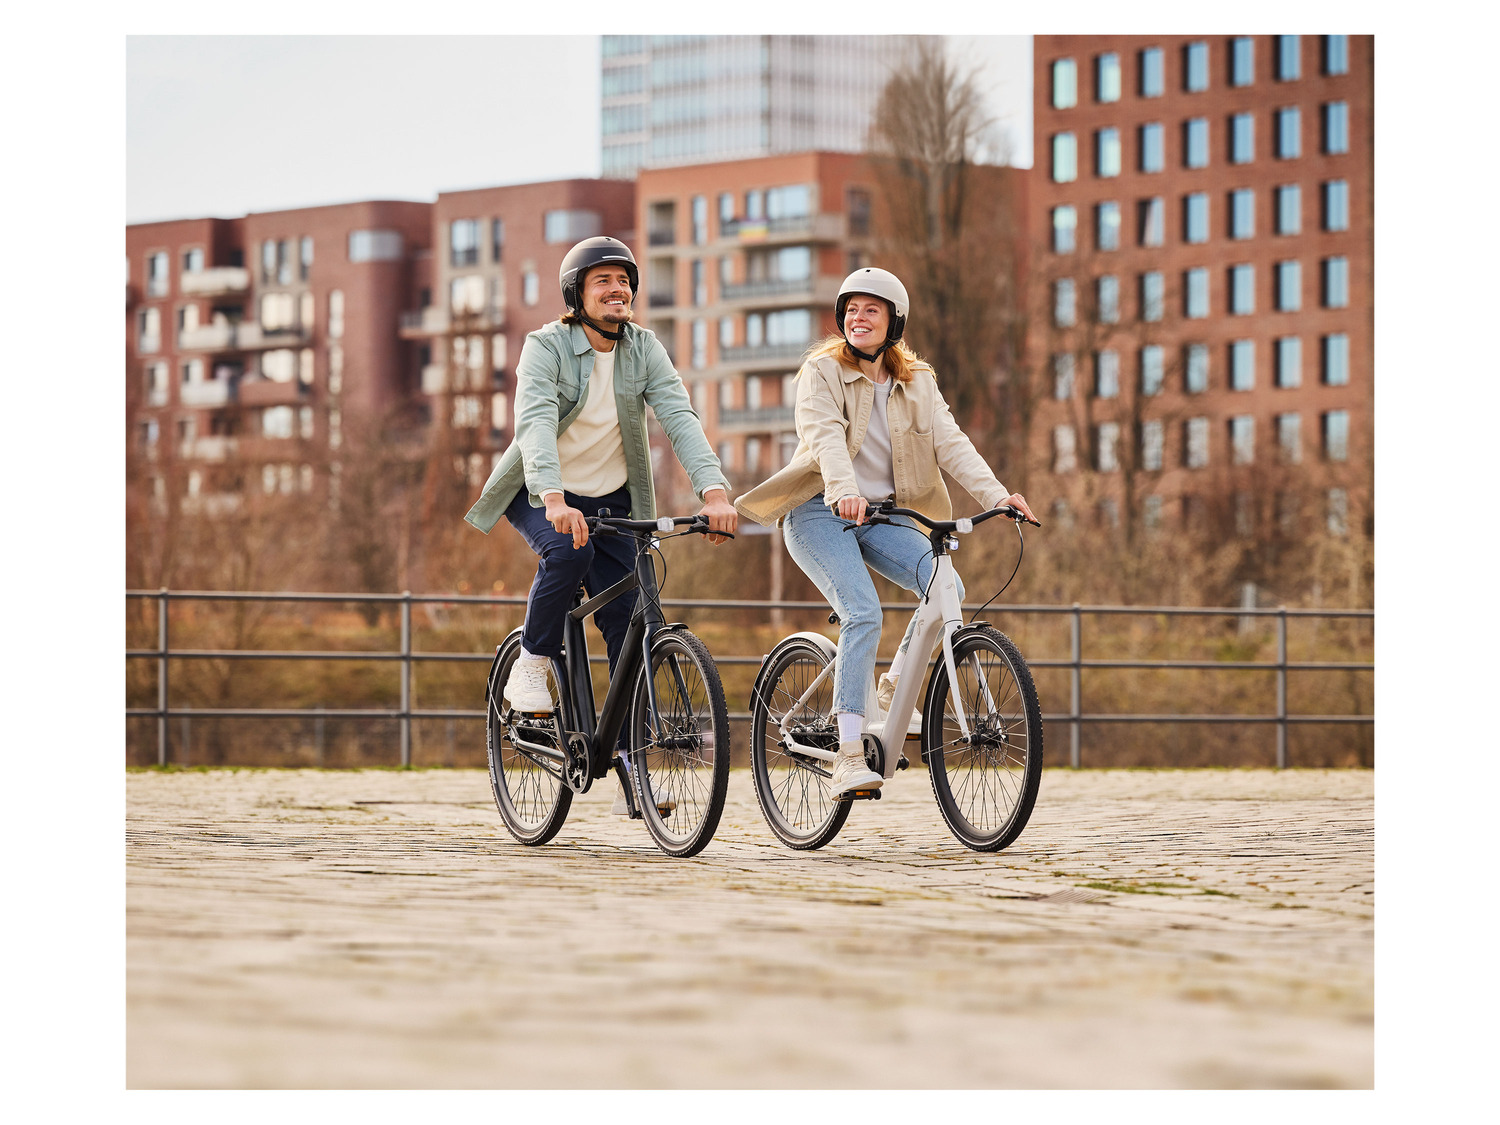 CRIVIT Urban E-Bike X kaufen LIDL | online